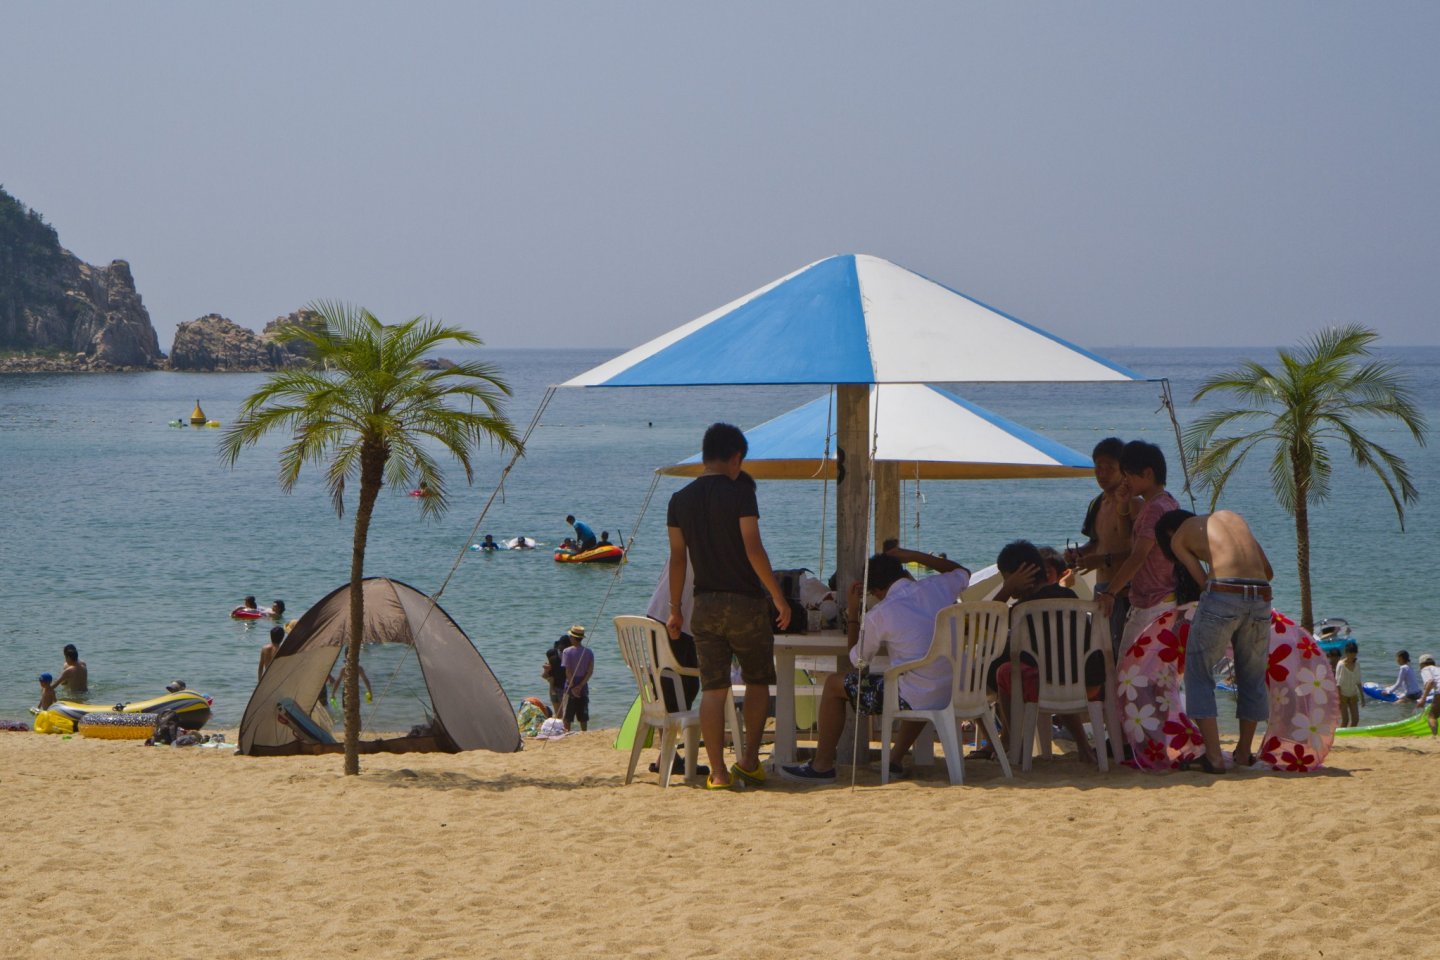 Rumah pantai menyediakan parasol besar dan tempat duduk di pantai